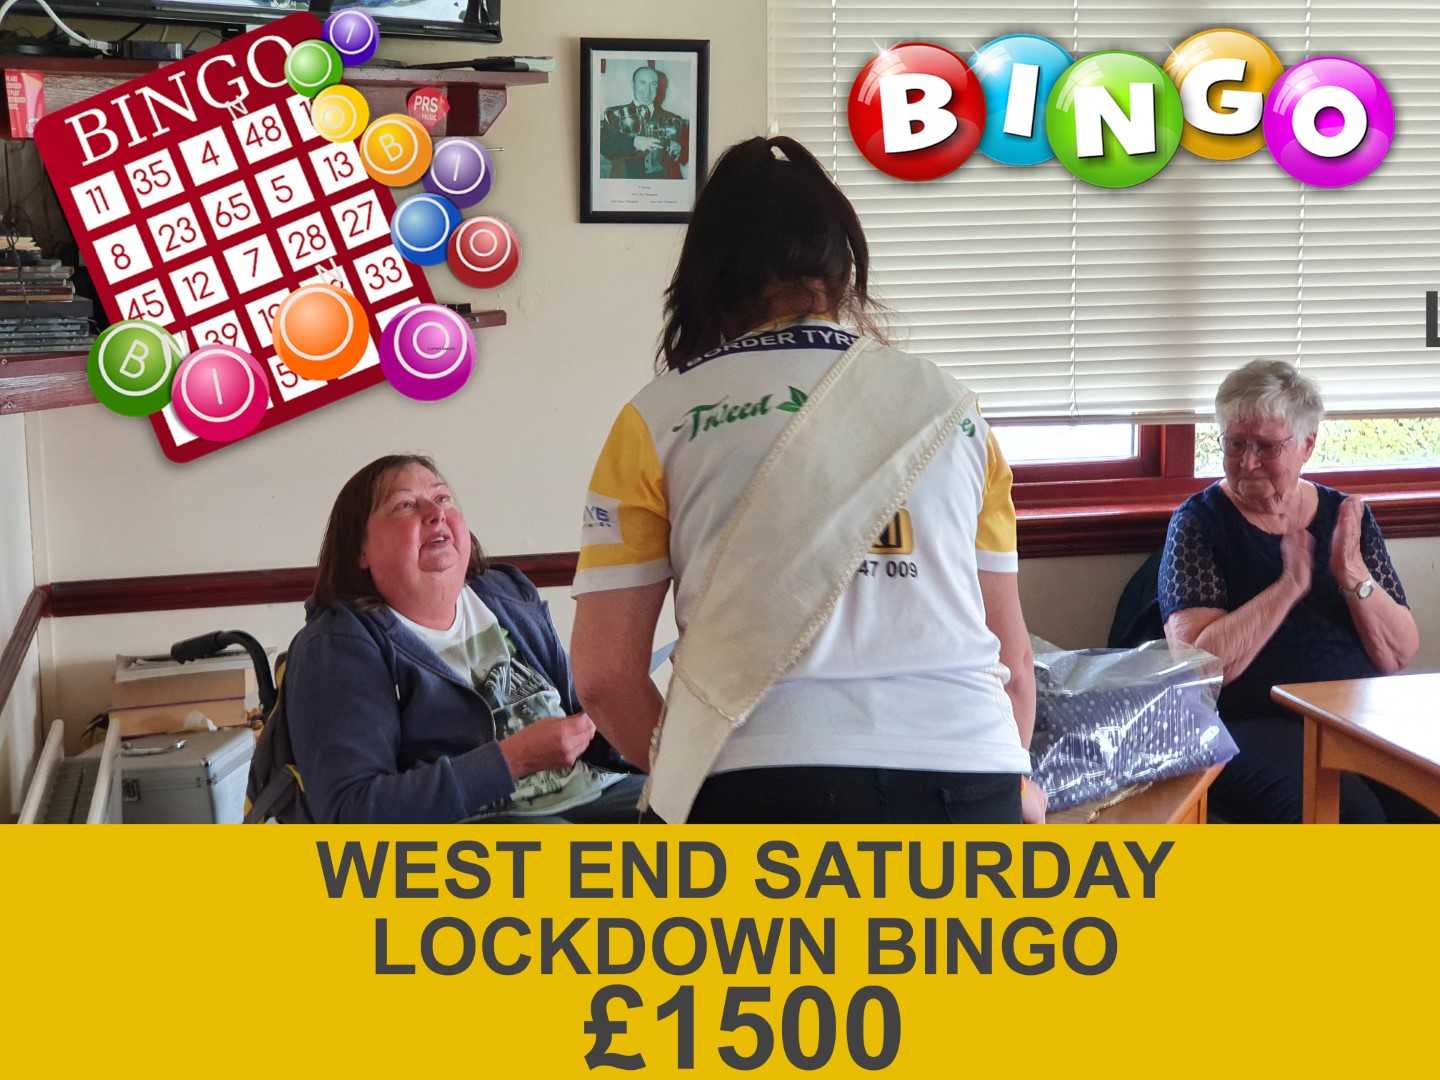 Carol Ditchfield's 'lockdown bingo' rasies £1500 for Berwick Cancer Cars